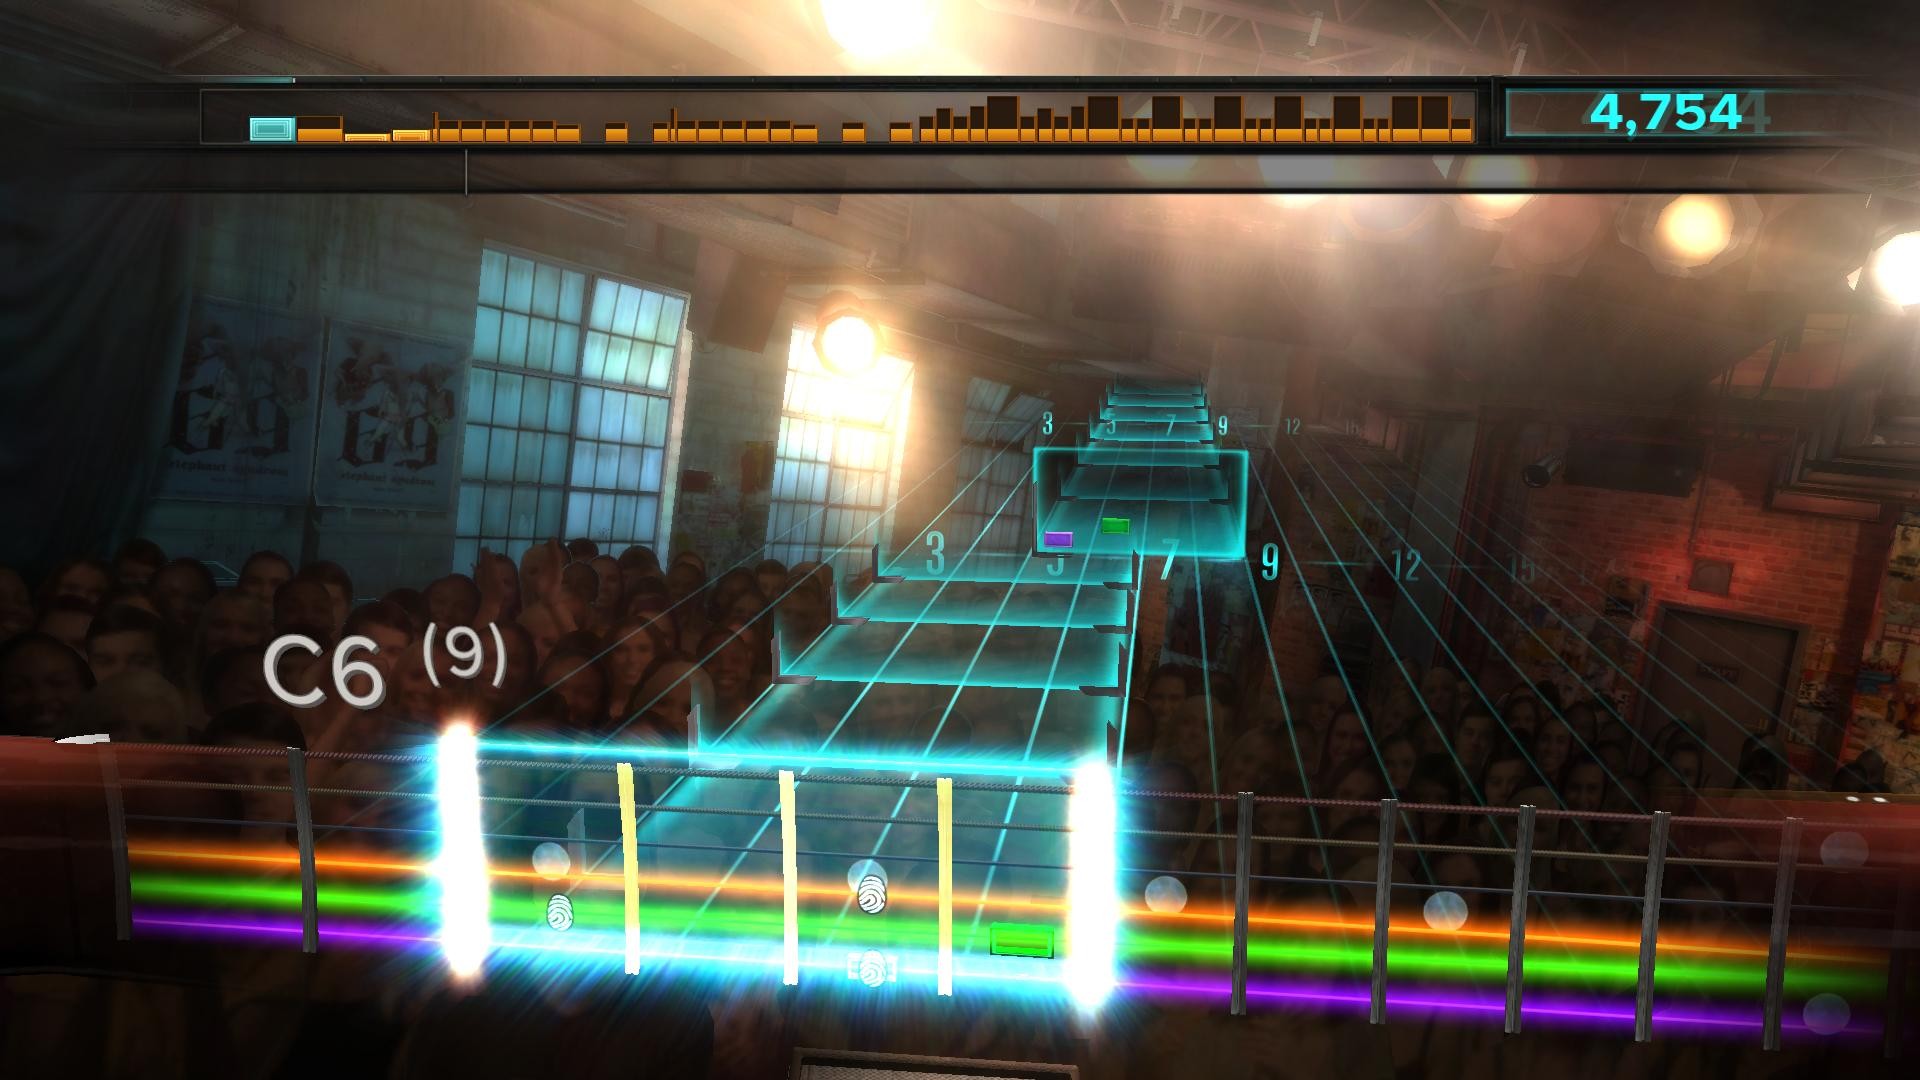 Rocksmith - Megadeth 3-Song Pack screenshot